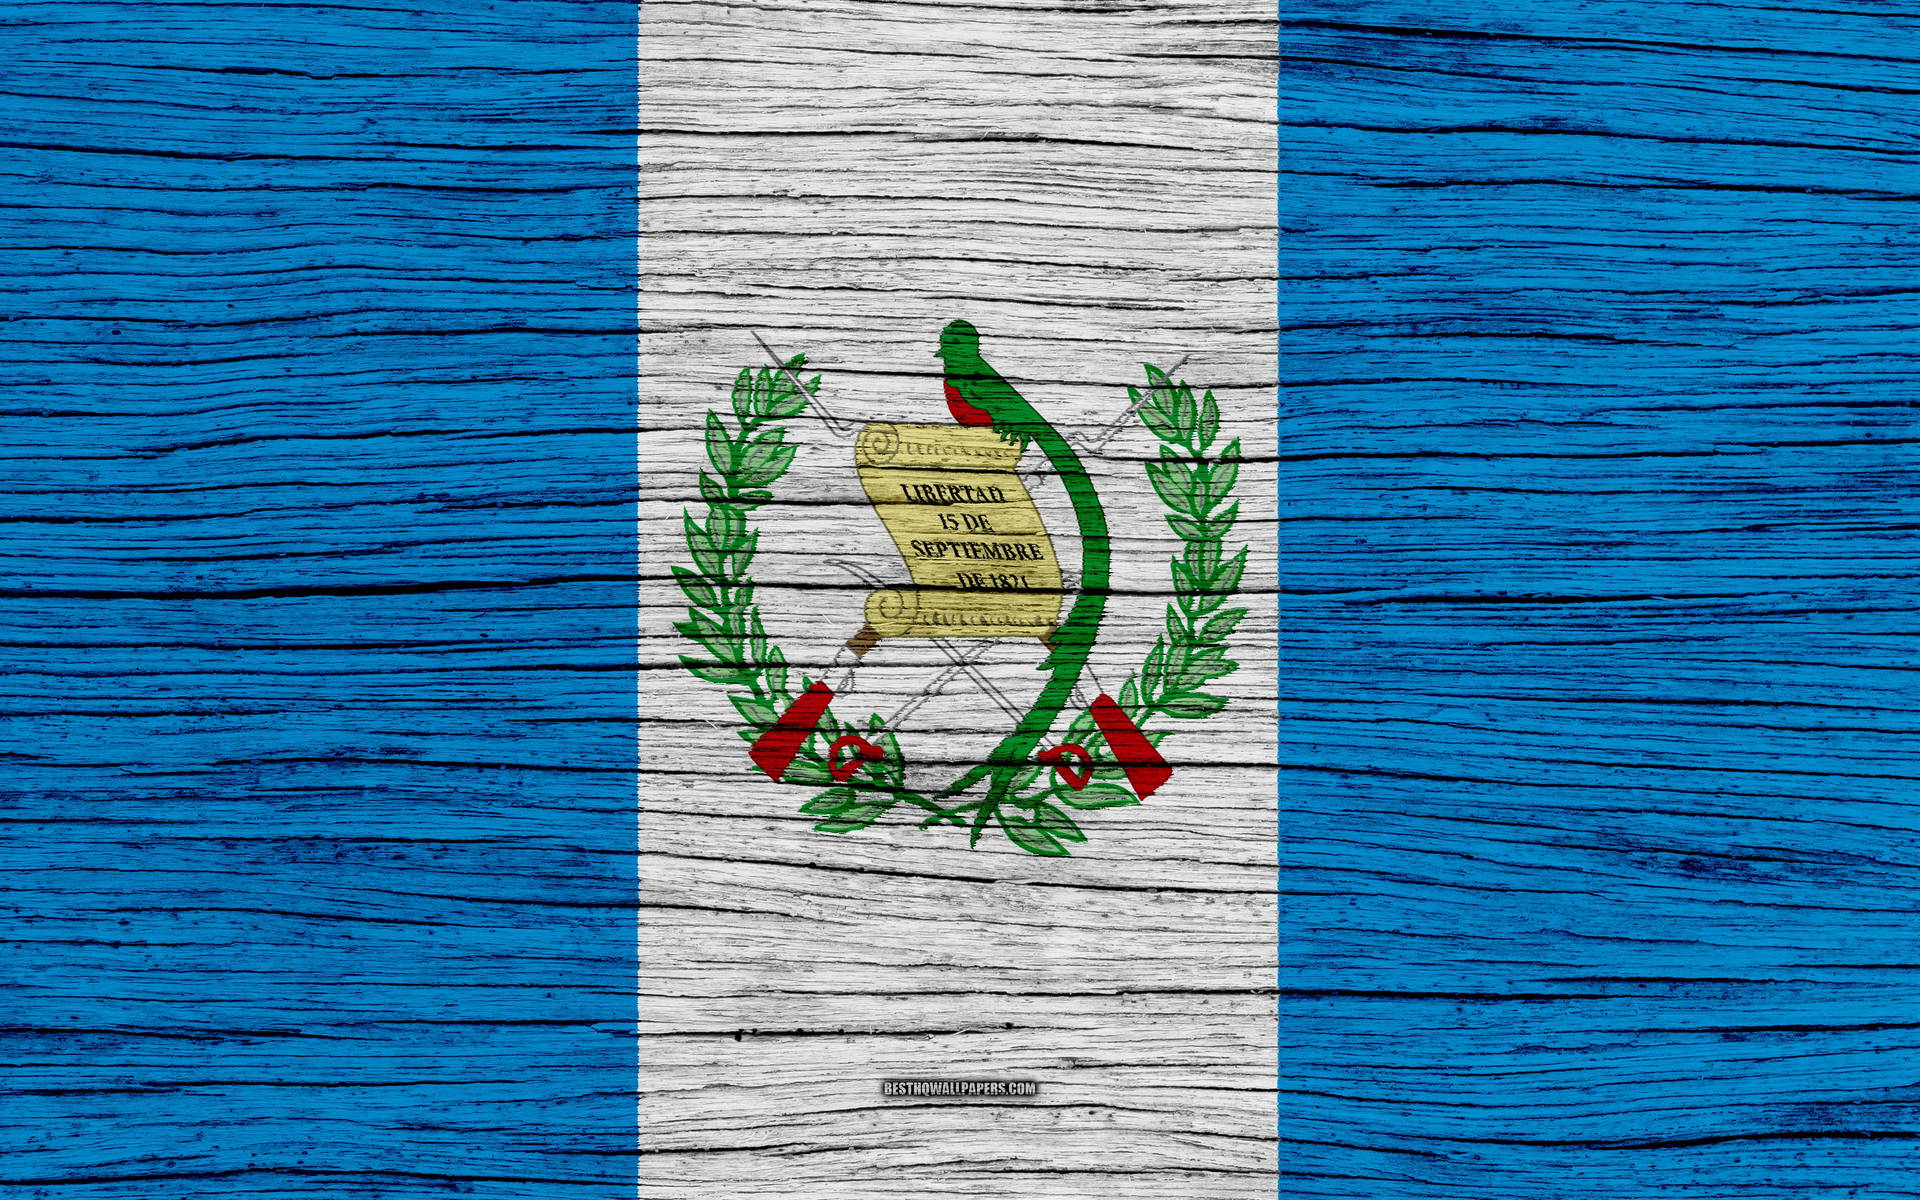 Banderade Guatemala En Madera Fondo de pantalla